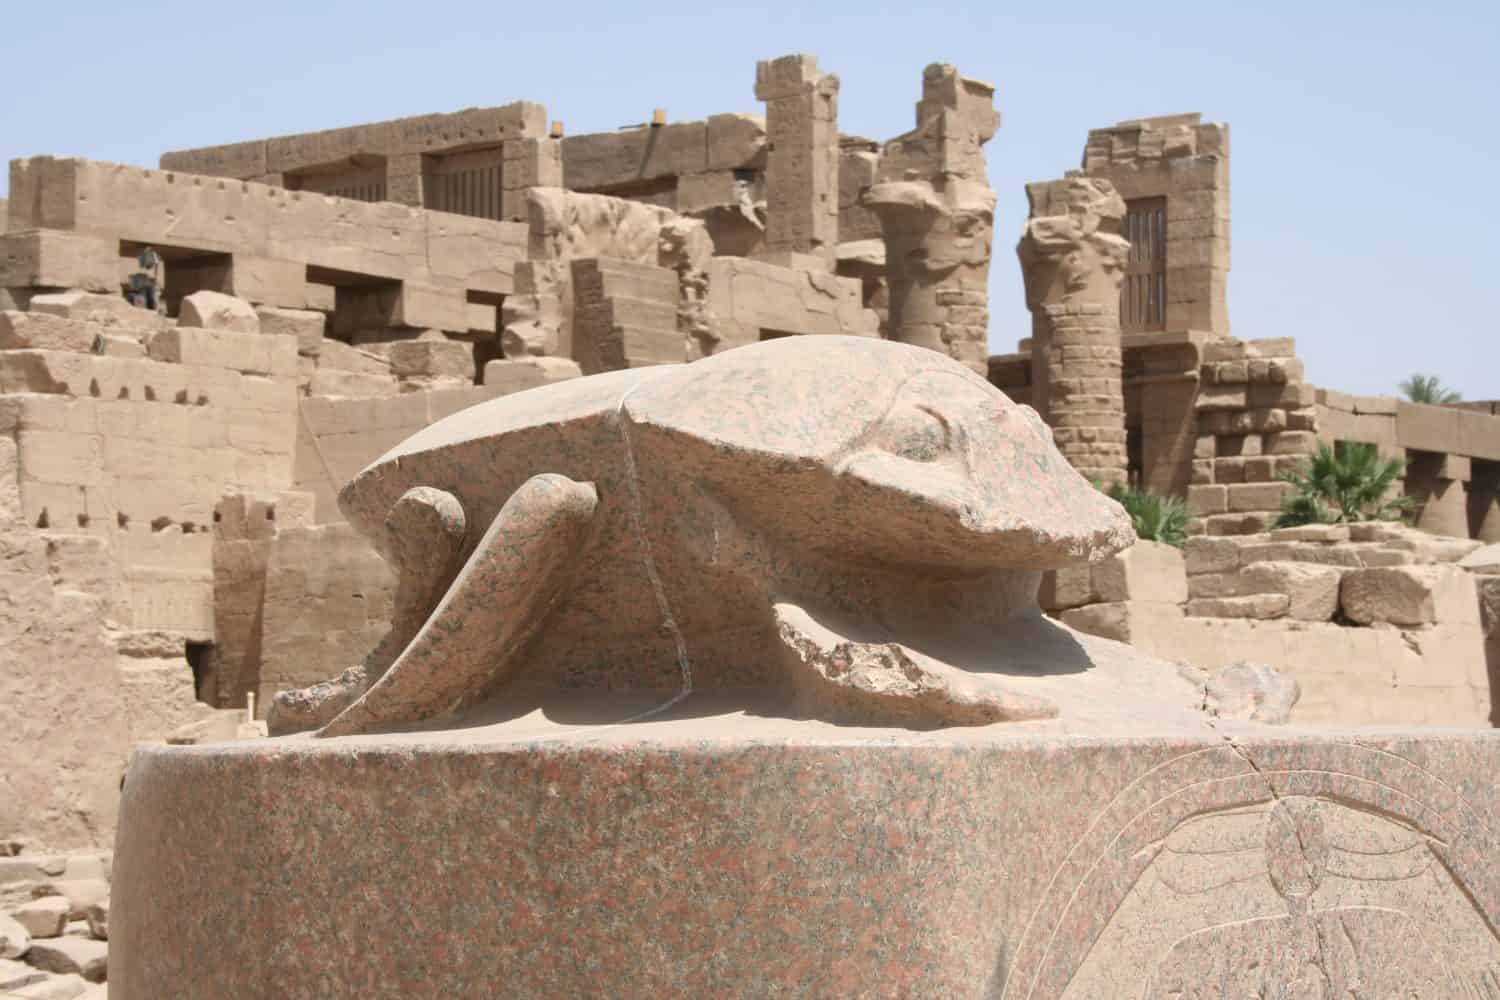 frog statue at temple of karnak, egypt